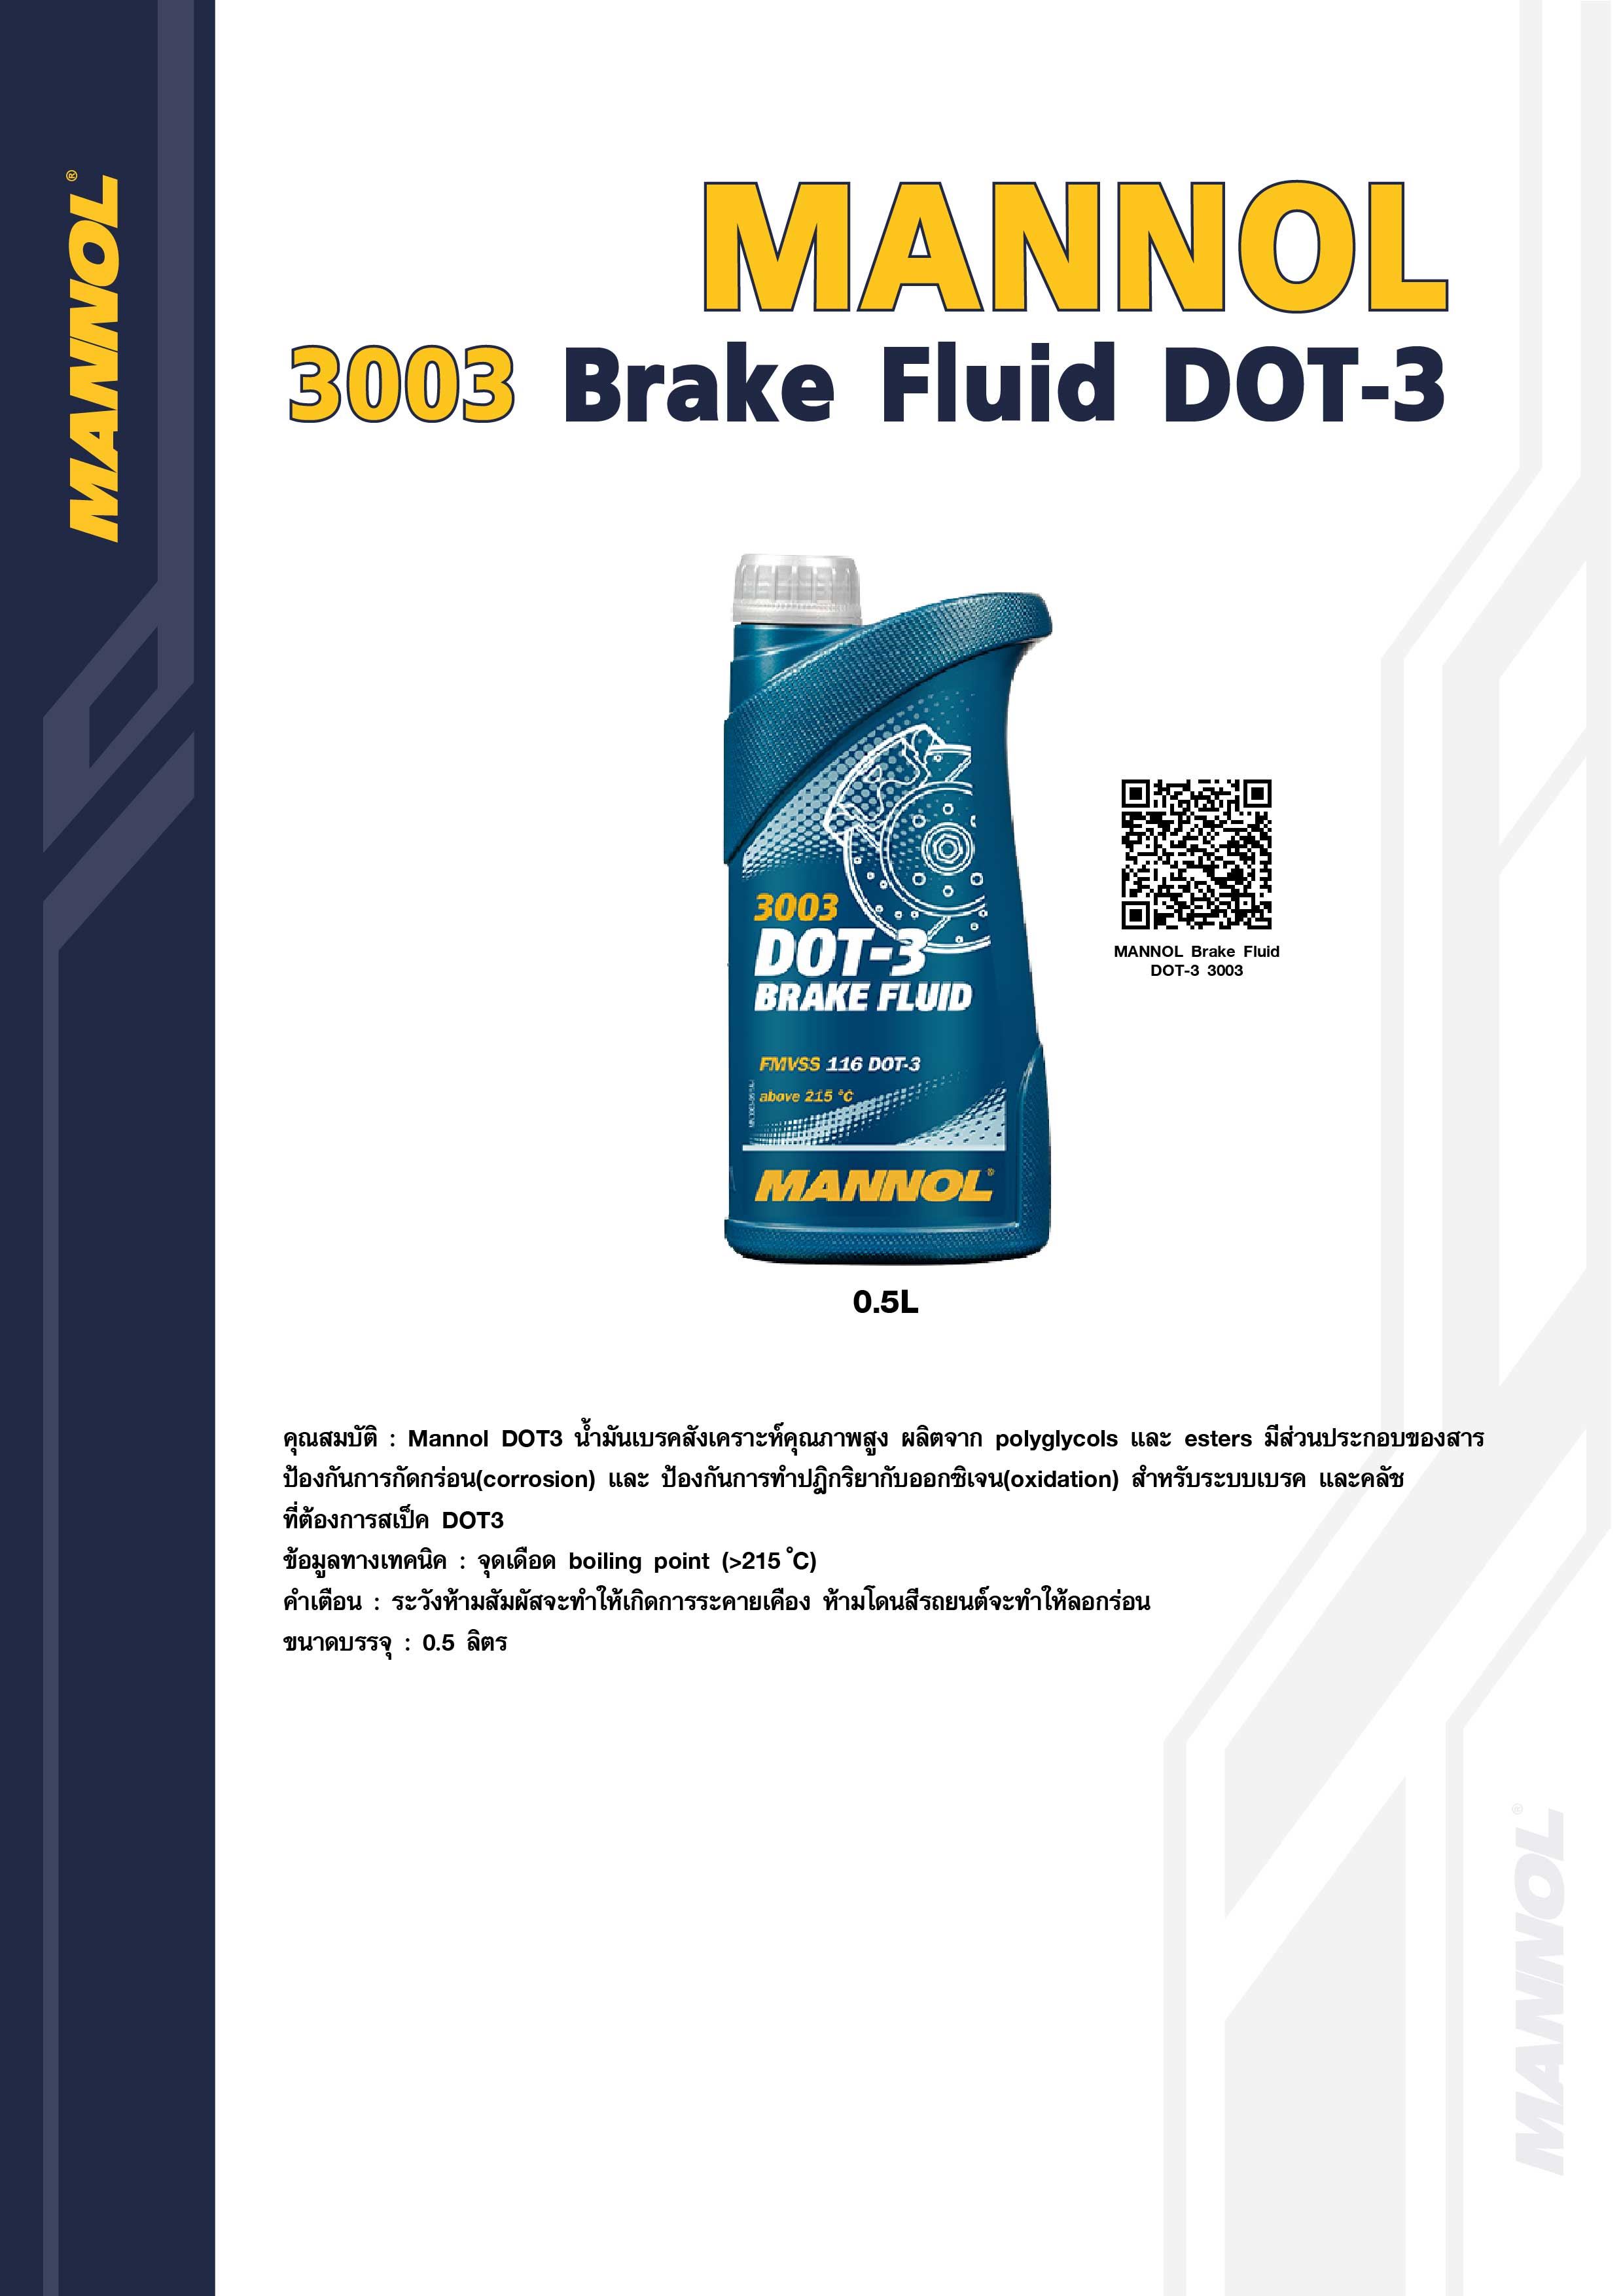 MANNOL Brake Fluid DOT 3 3003 500ml